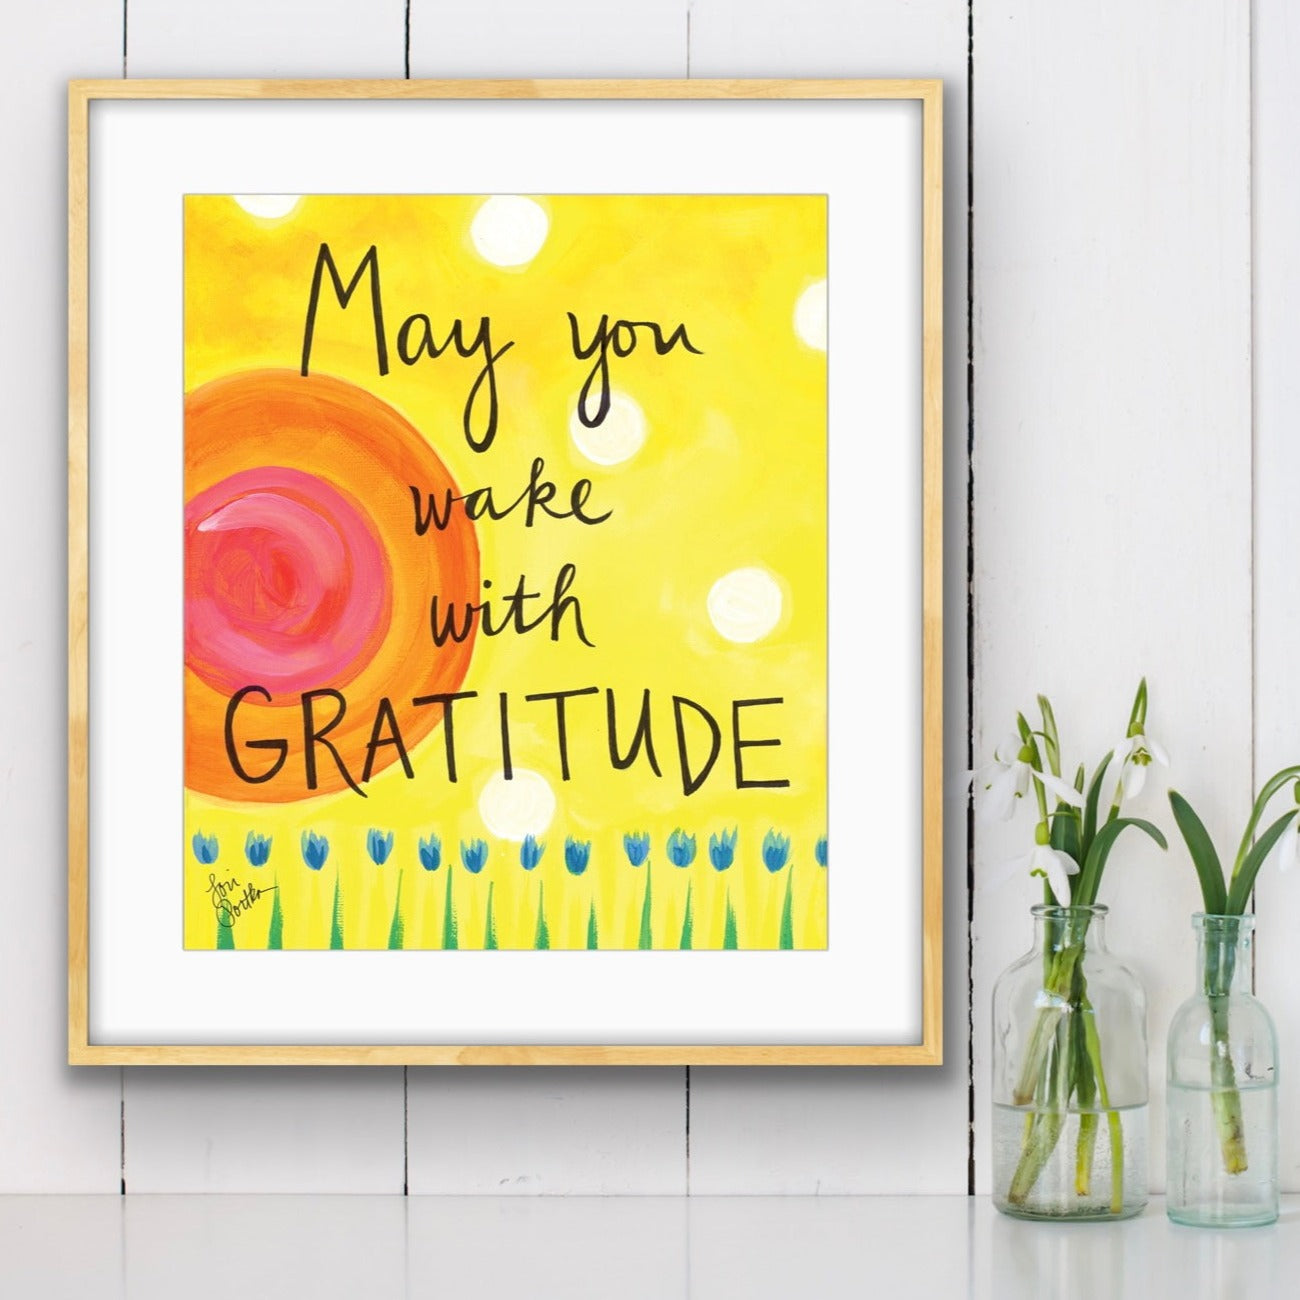 Wake with Gratitude (8x10)